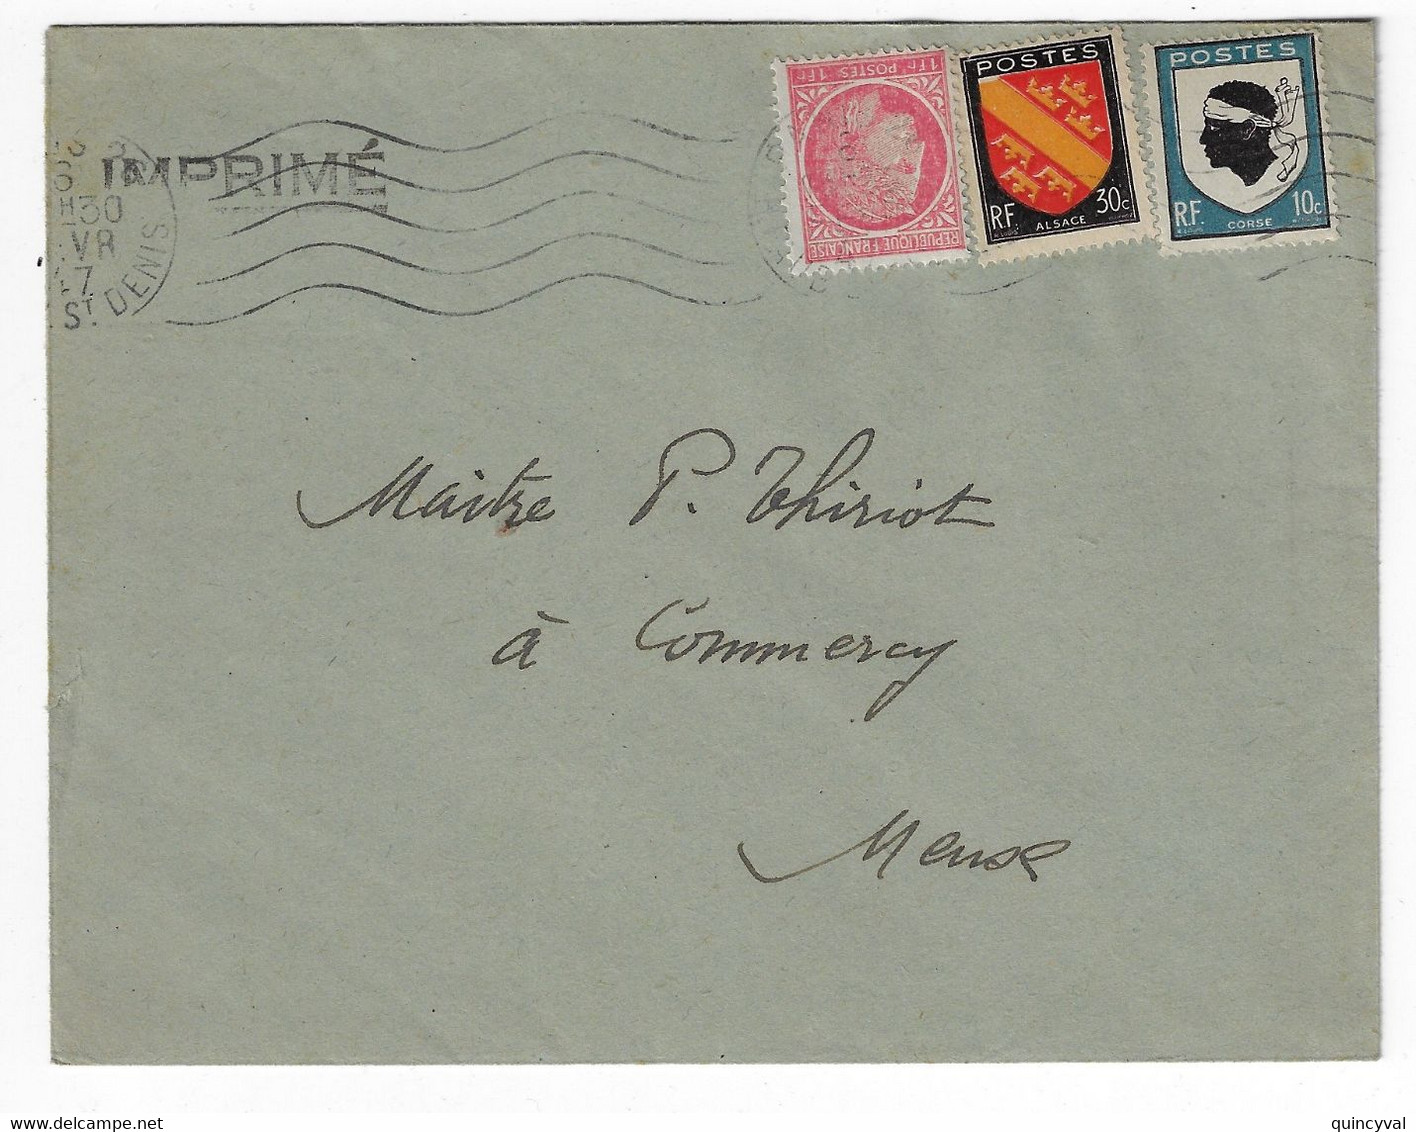 PARIS 26 Imprimé 1F Mazelin 30c Alsace 10c Corse Yv 676 756 755 Ob 1947 - Briefe U. Dokumente